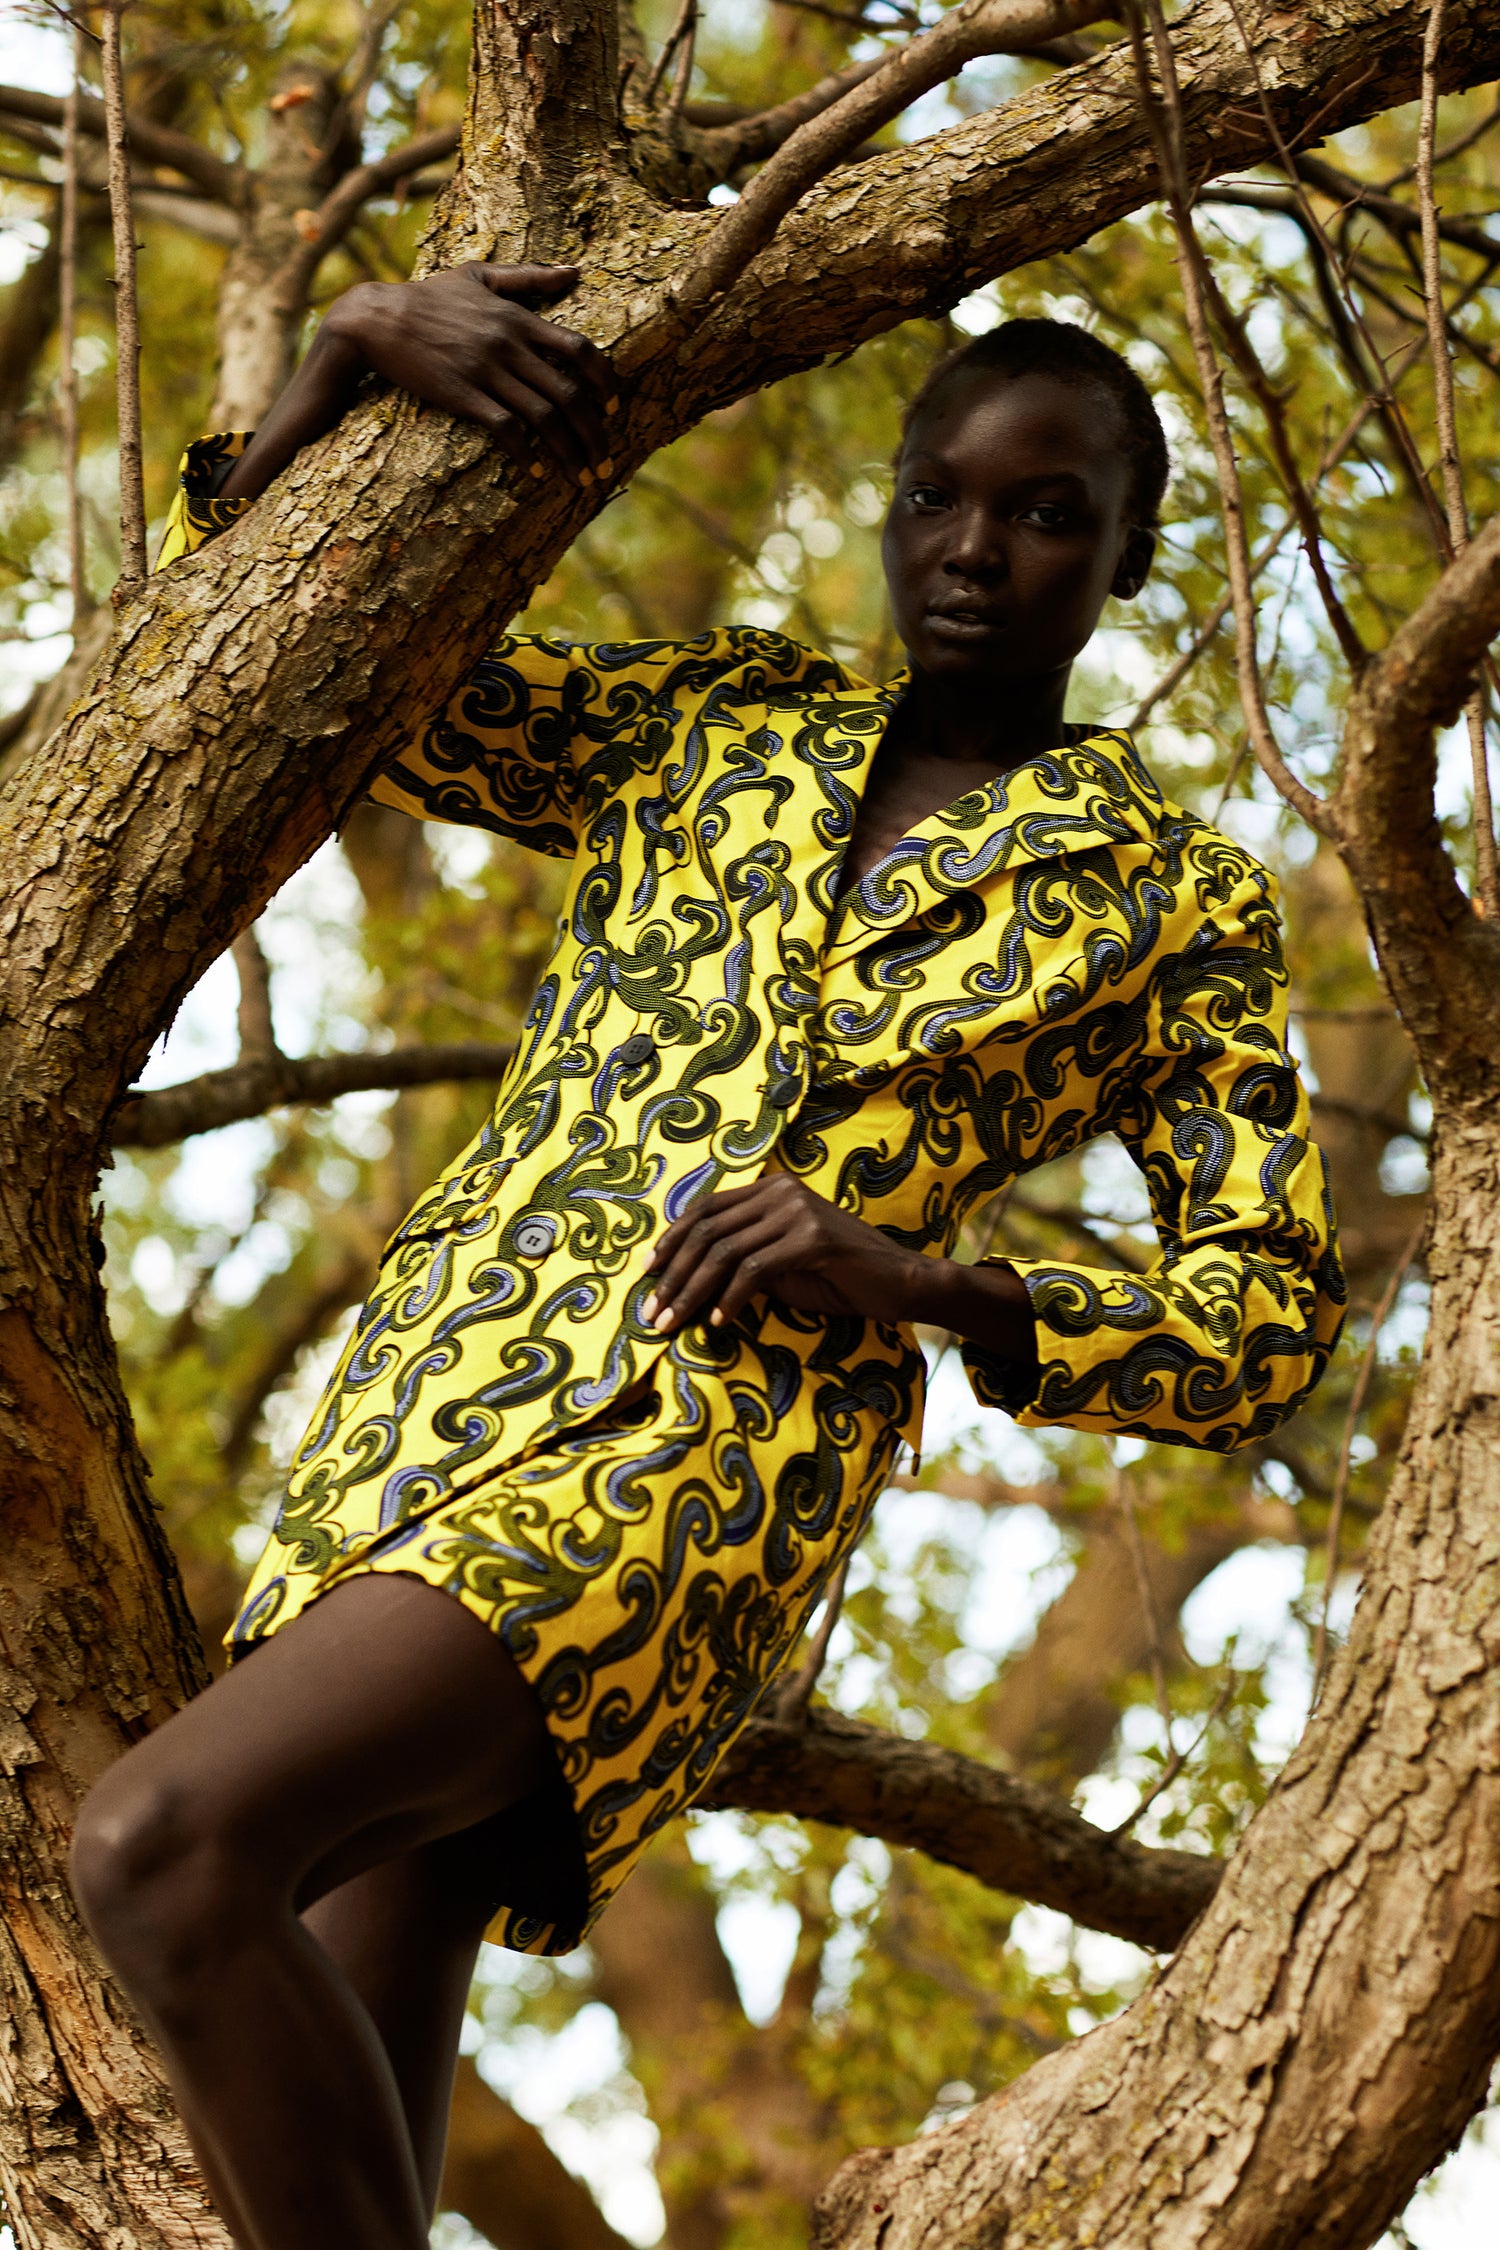 Tope African Print Mini Dress - MAHOSTYLE